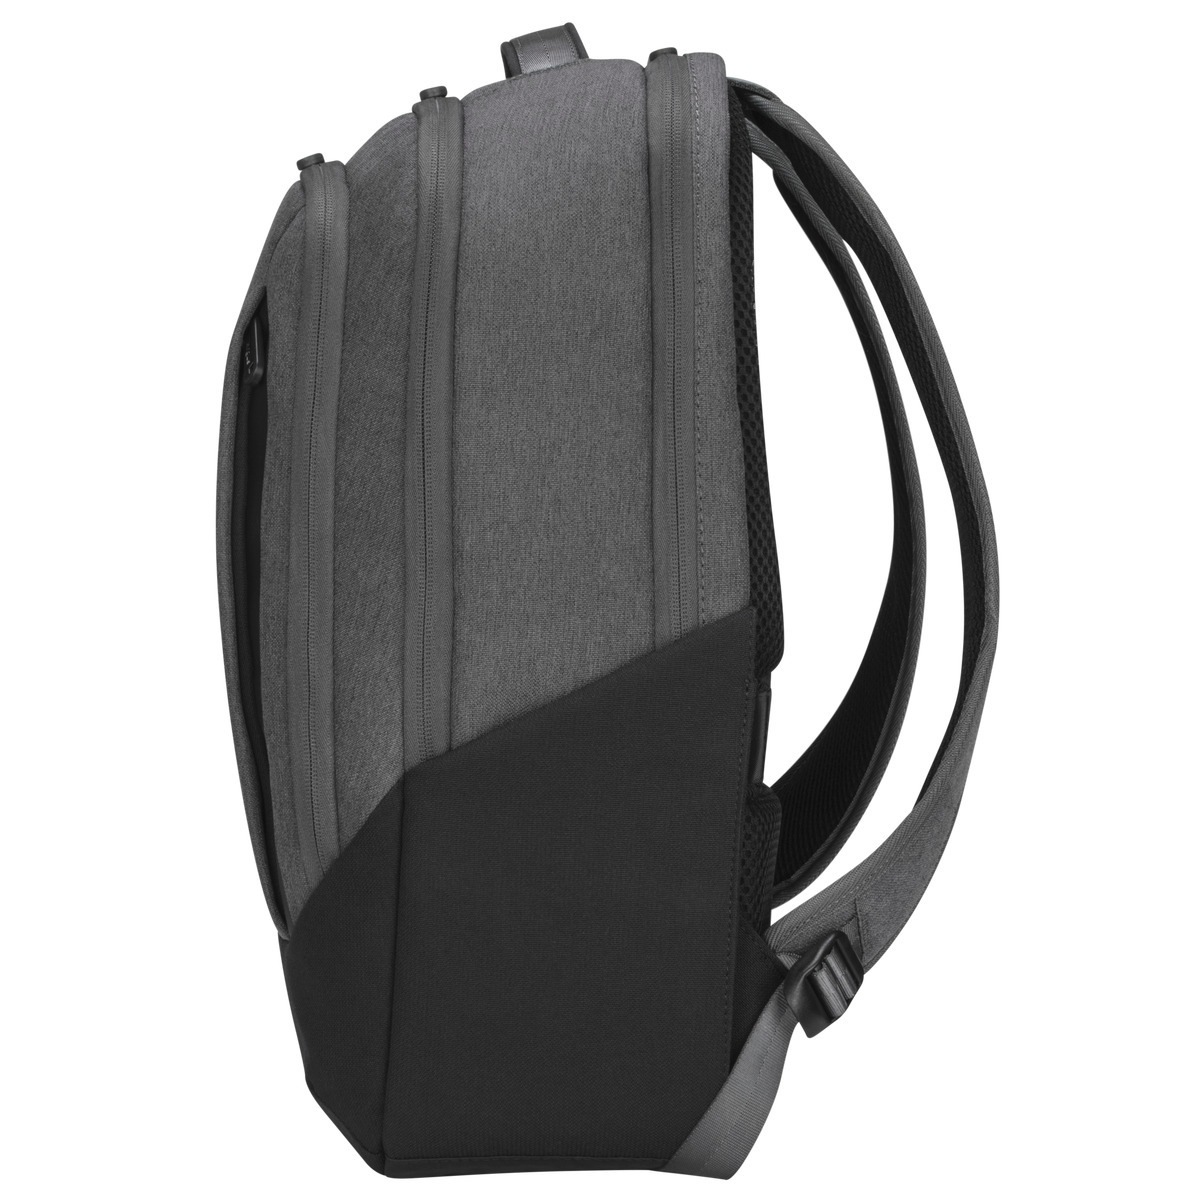 Targus Notebook-Rucksack »Cypress Eco Backpack 15.6«